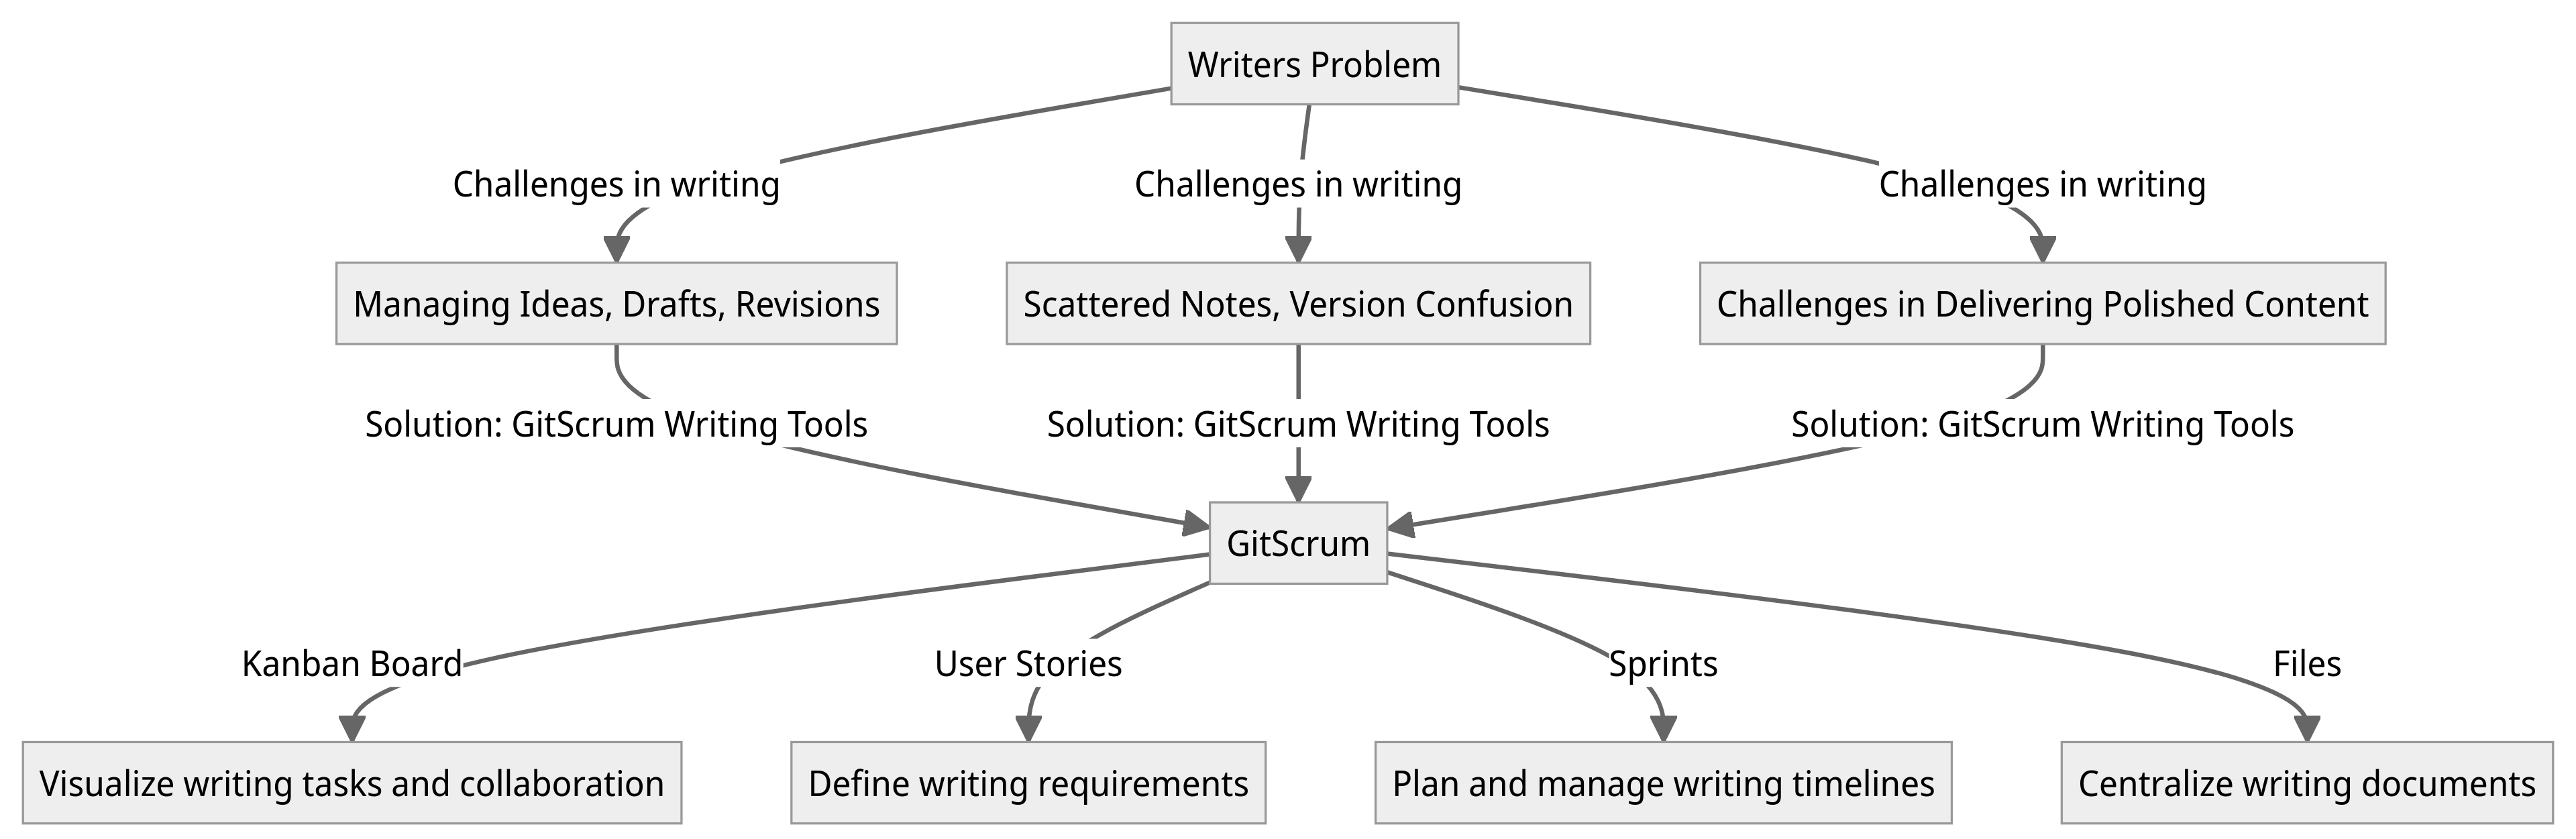 Diagram - Writers